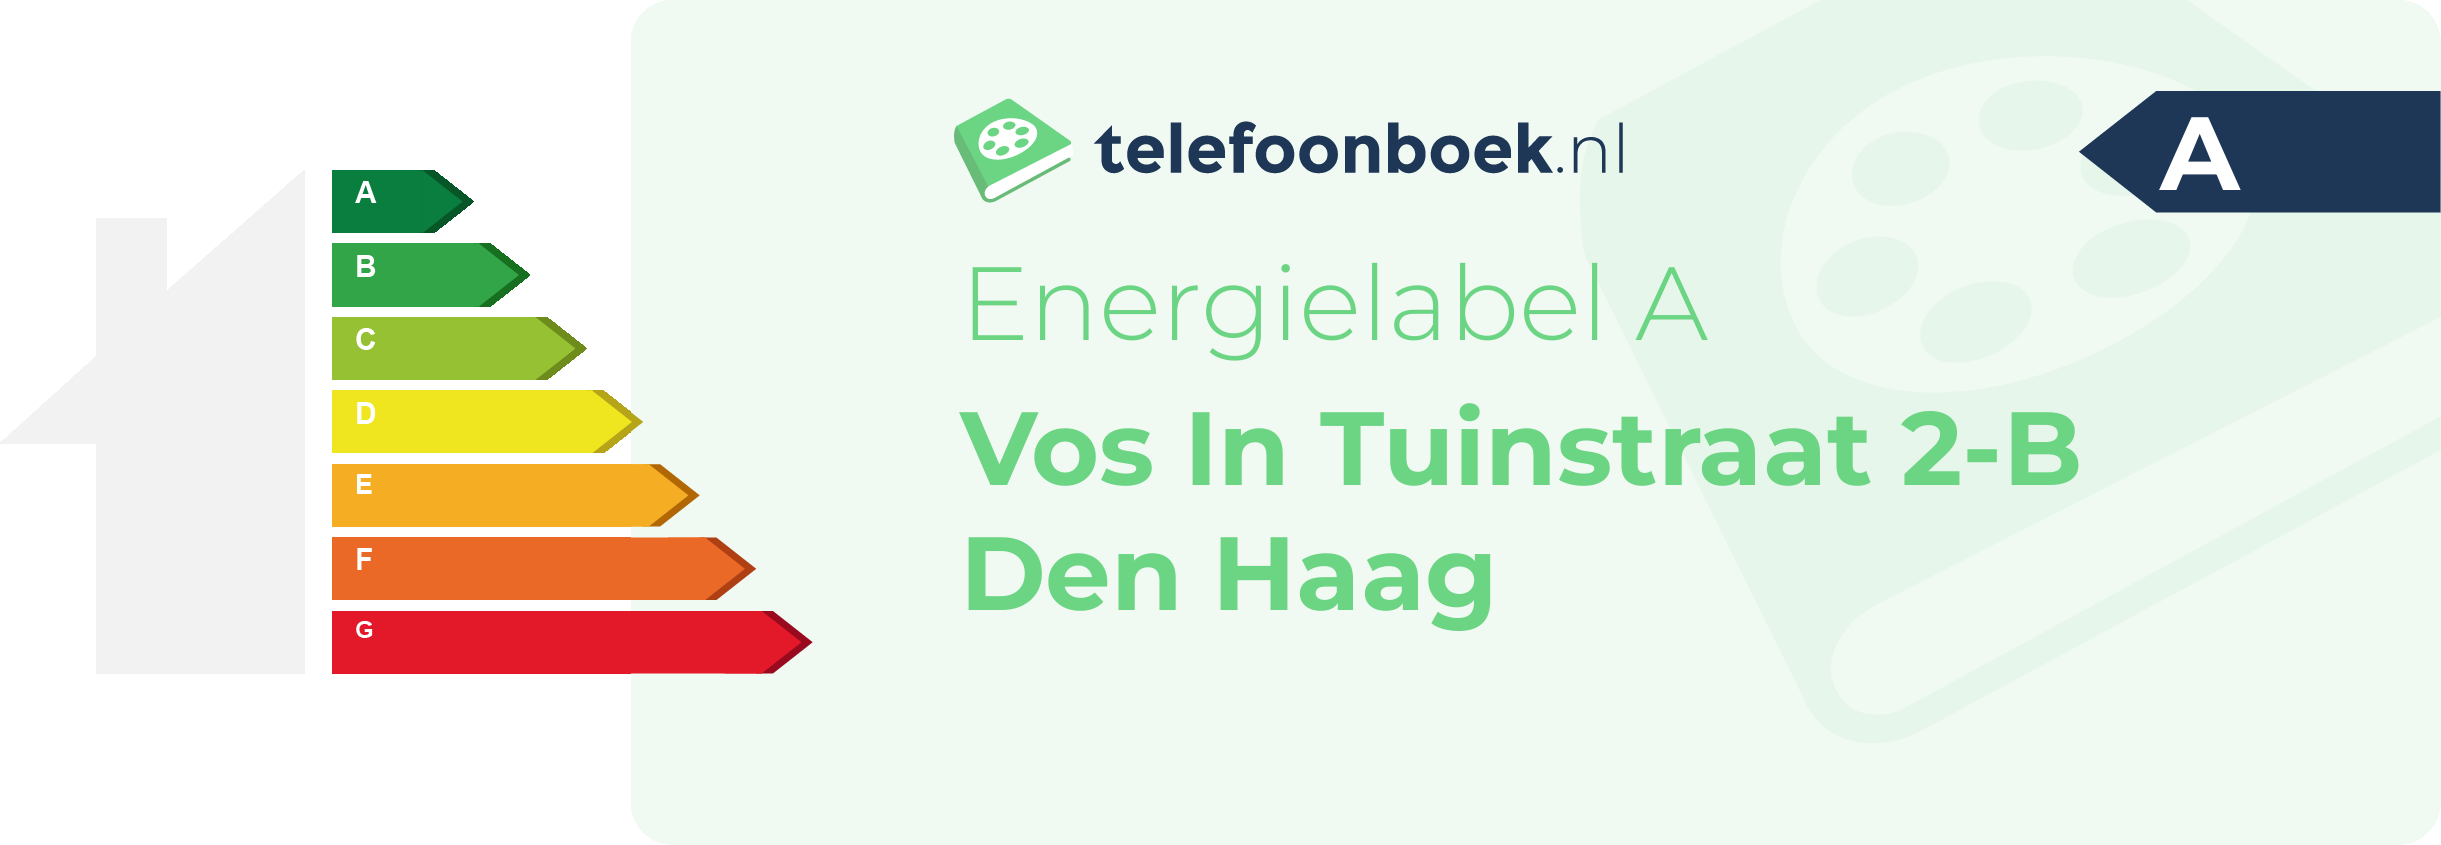 Energielabel Vos In Tuinstraat 2-B Den Haag